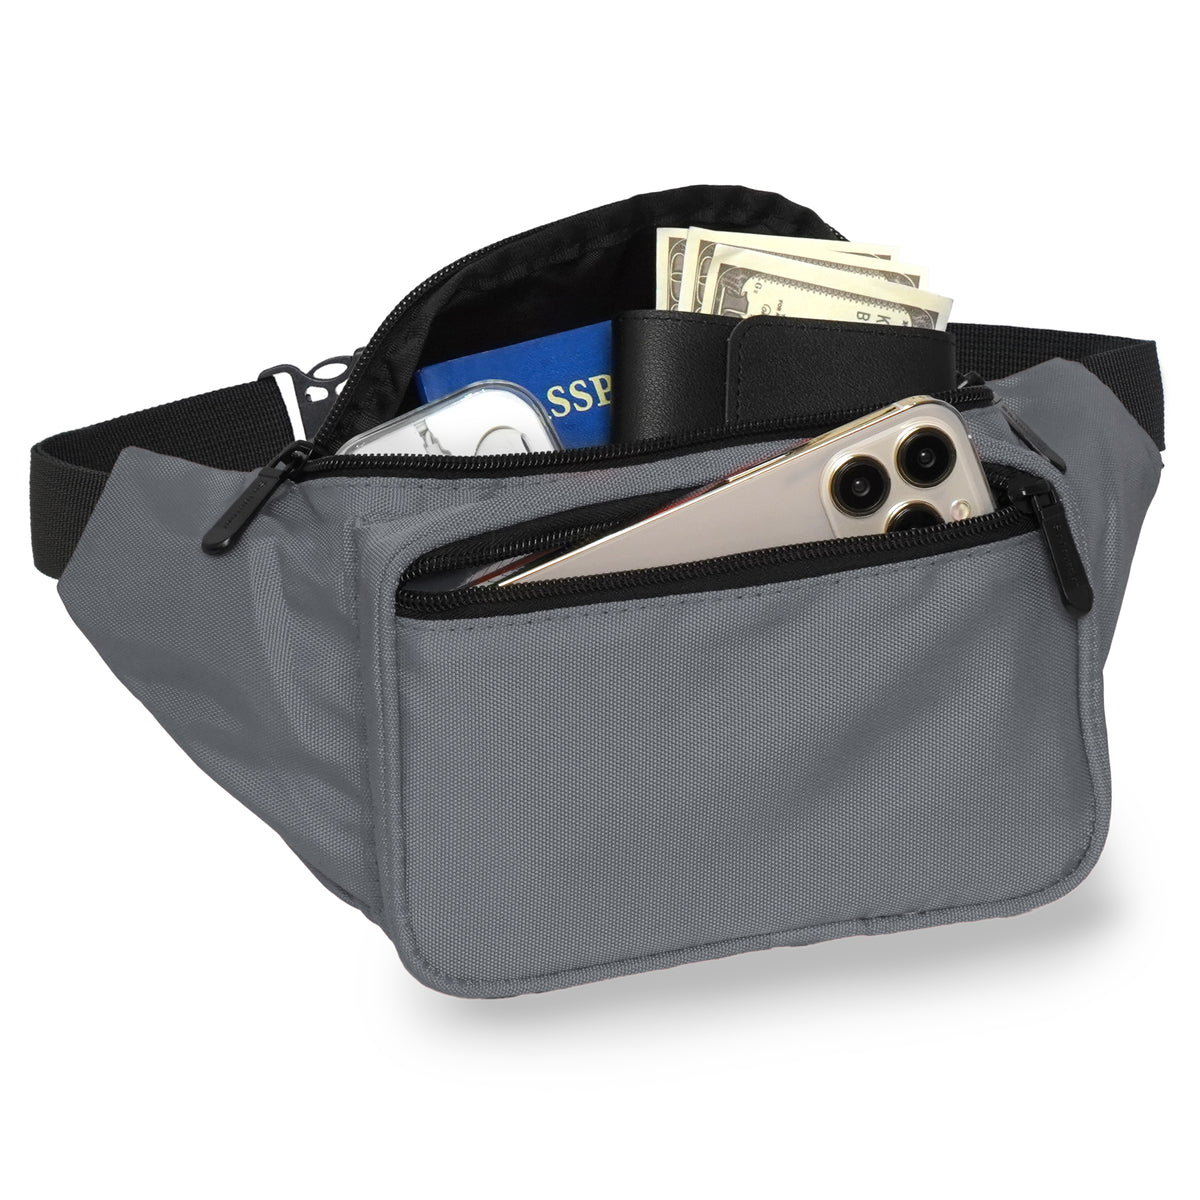 Portable Belt Extender for Fanny Pack Strap Extension Waist Bag